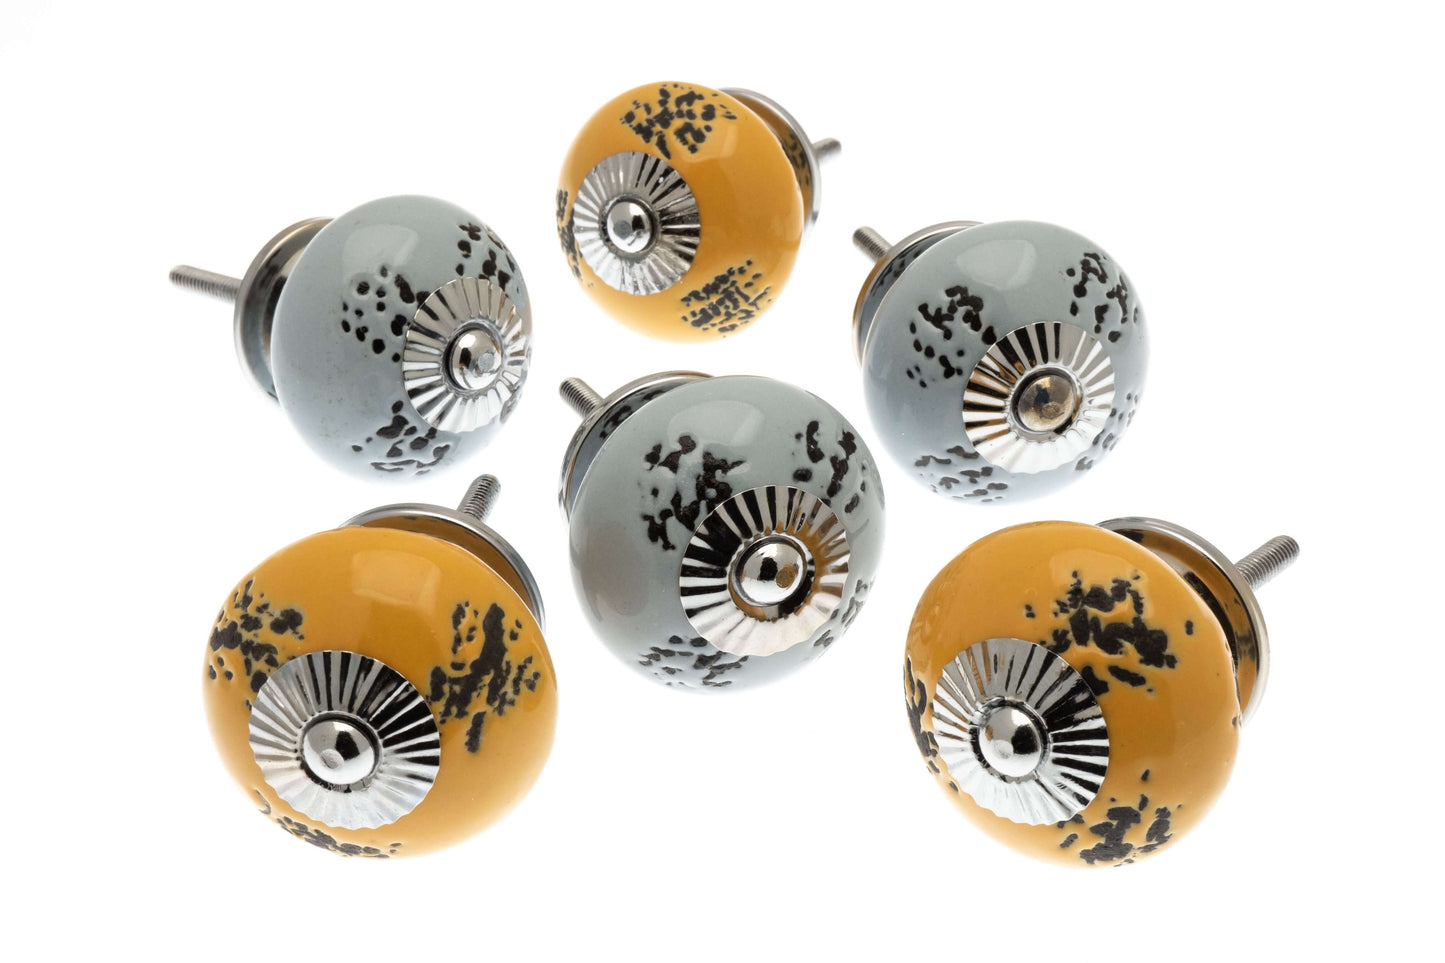 Ceramic Door Knobs Saffron and Whisper Grey Distressed Effect Knobs (Set of 6)